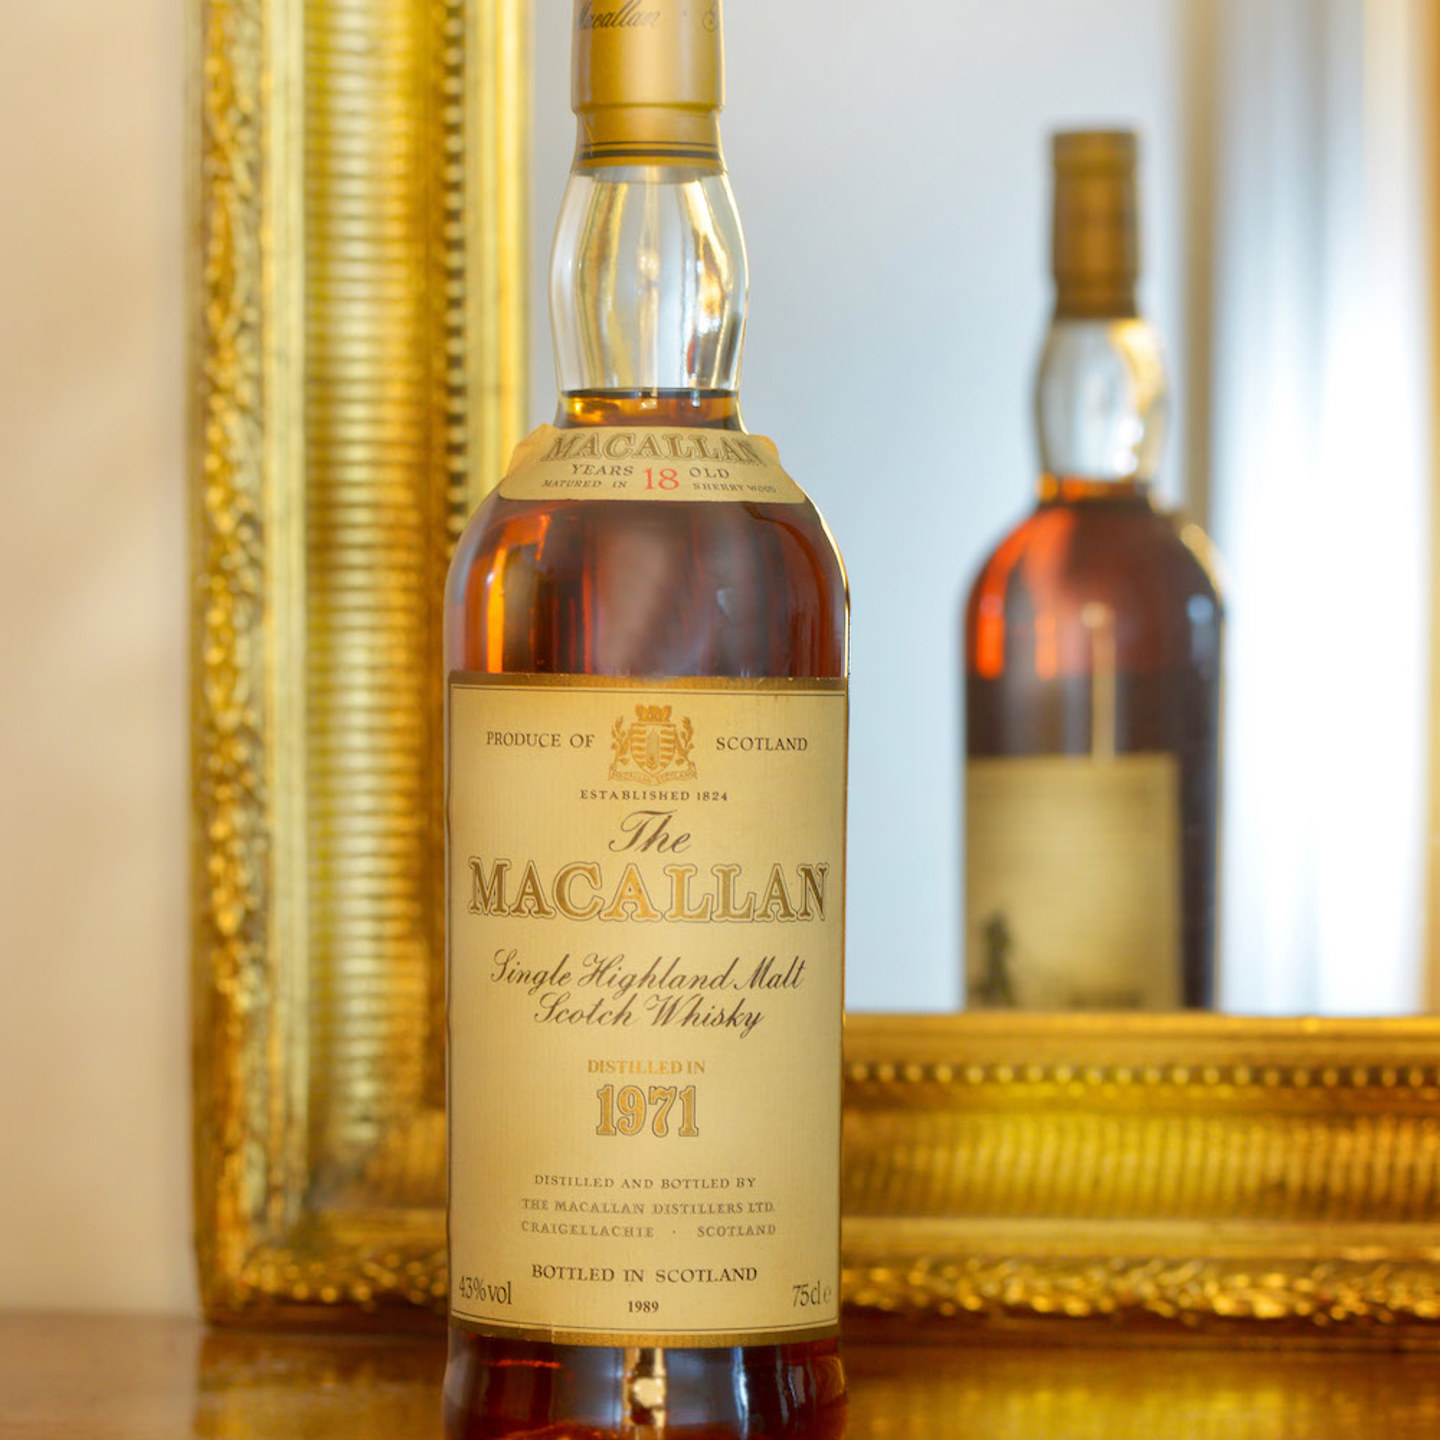 The Macallan Single Highland Malt Scotch Whisky, Sold Ś1500